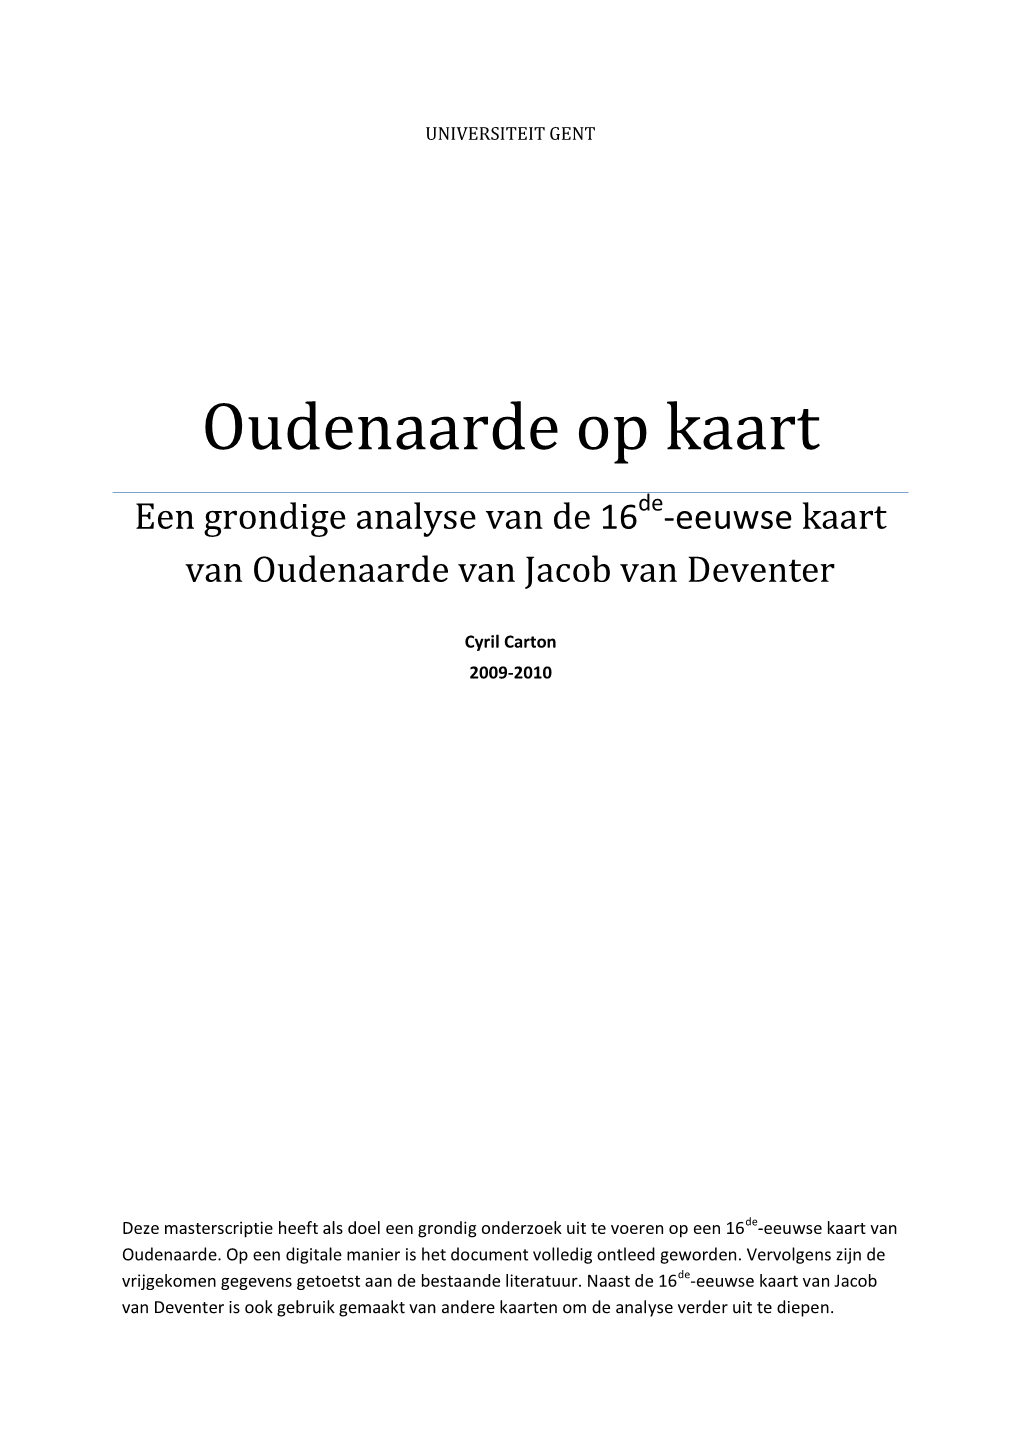 Oudenaarde Op Kaart Een Grondige Analyse Van De 16De-Eeuwse Kaart Van Oudenaarde Van Jacob Van Deventer